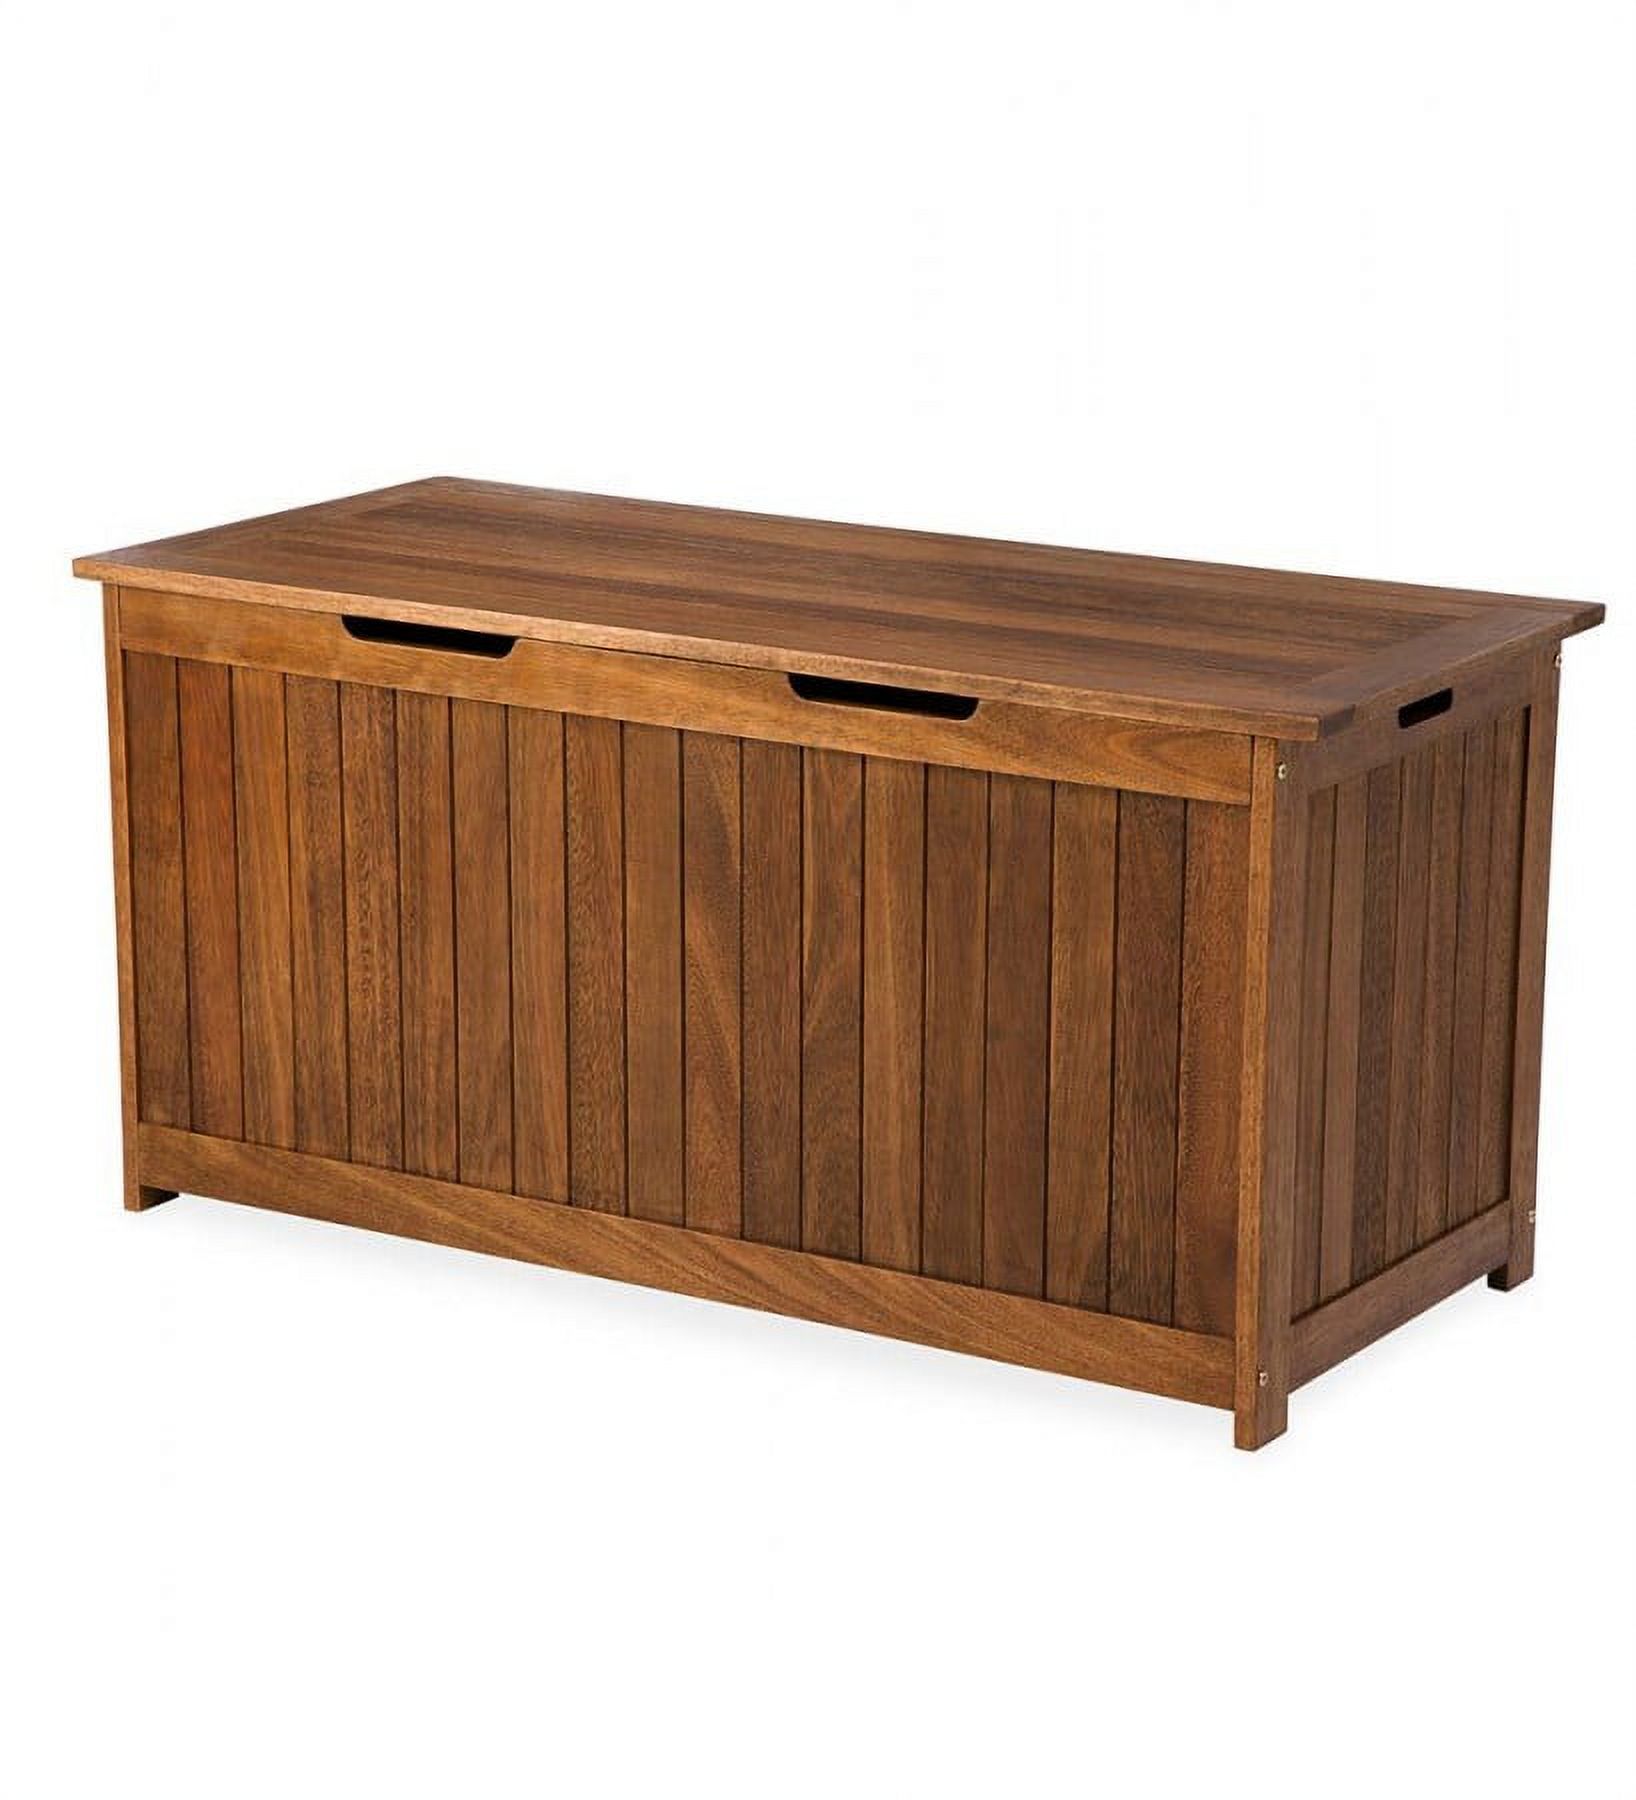 Eucalyptus Wood Storage Box / Deck Box - image 1 of 3